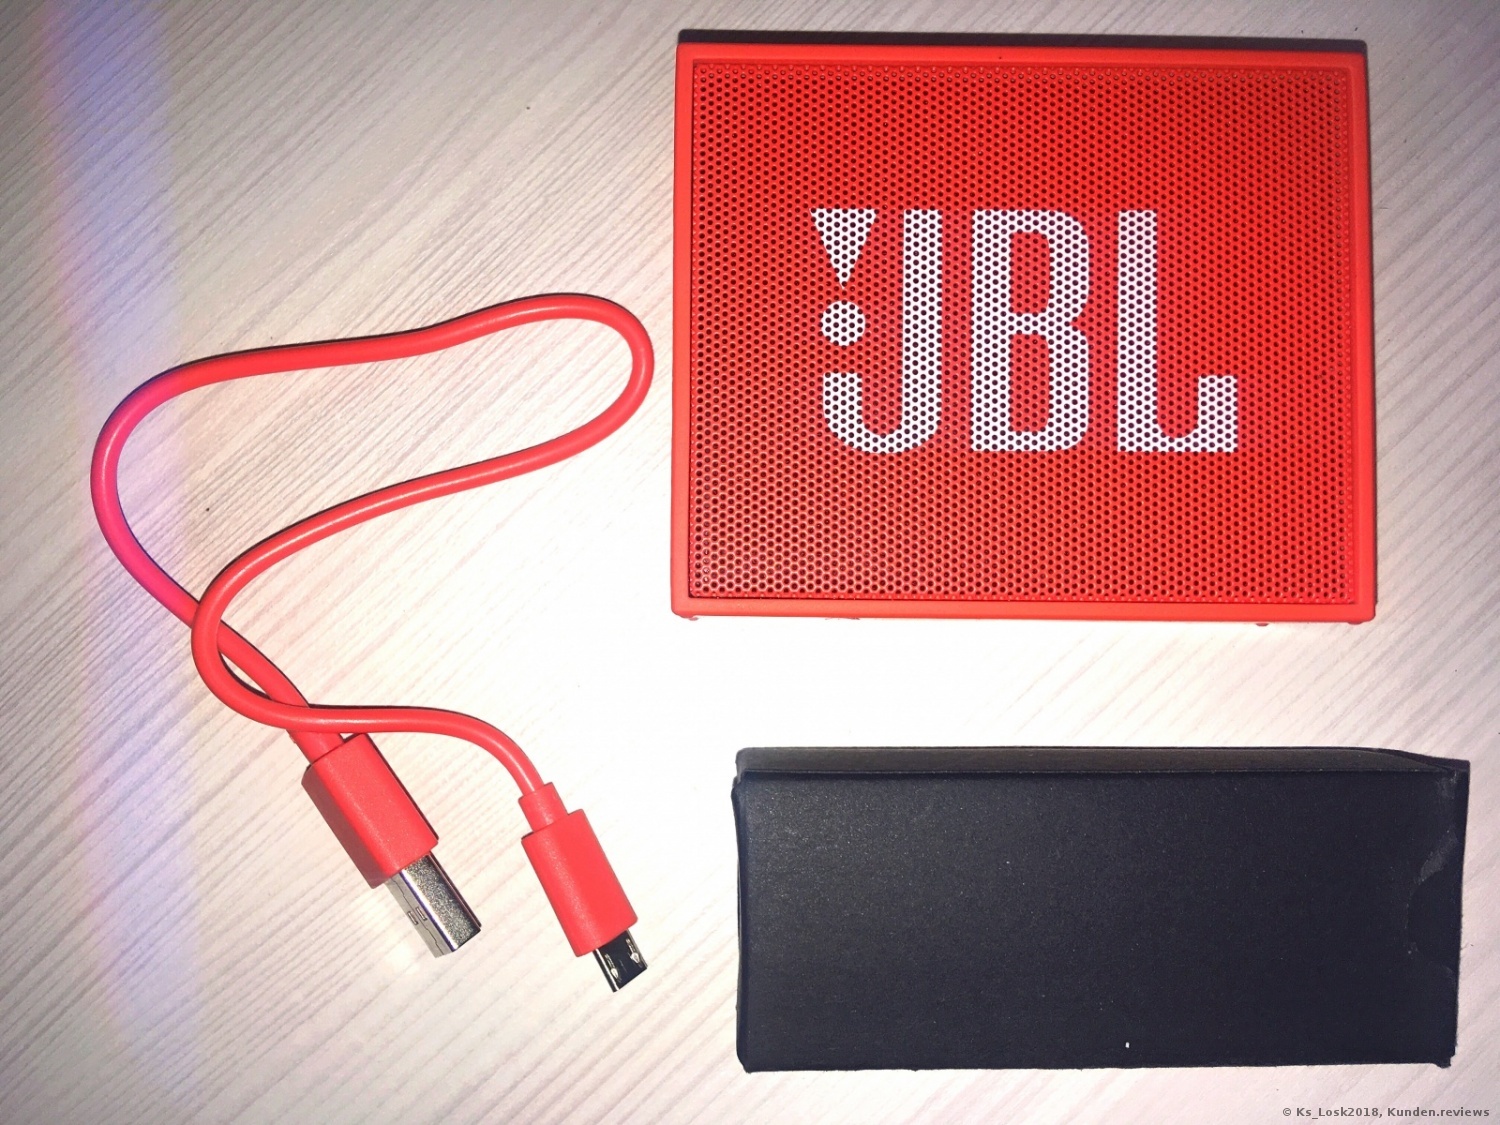 JBL GO Bluetooth Lautsprecher Foto